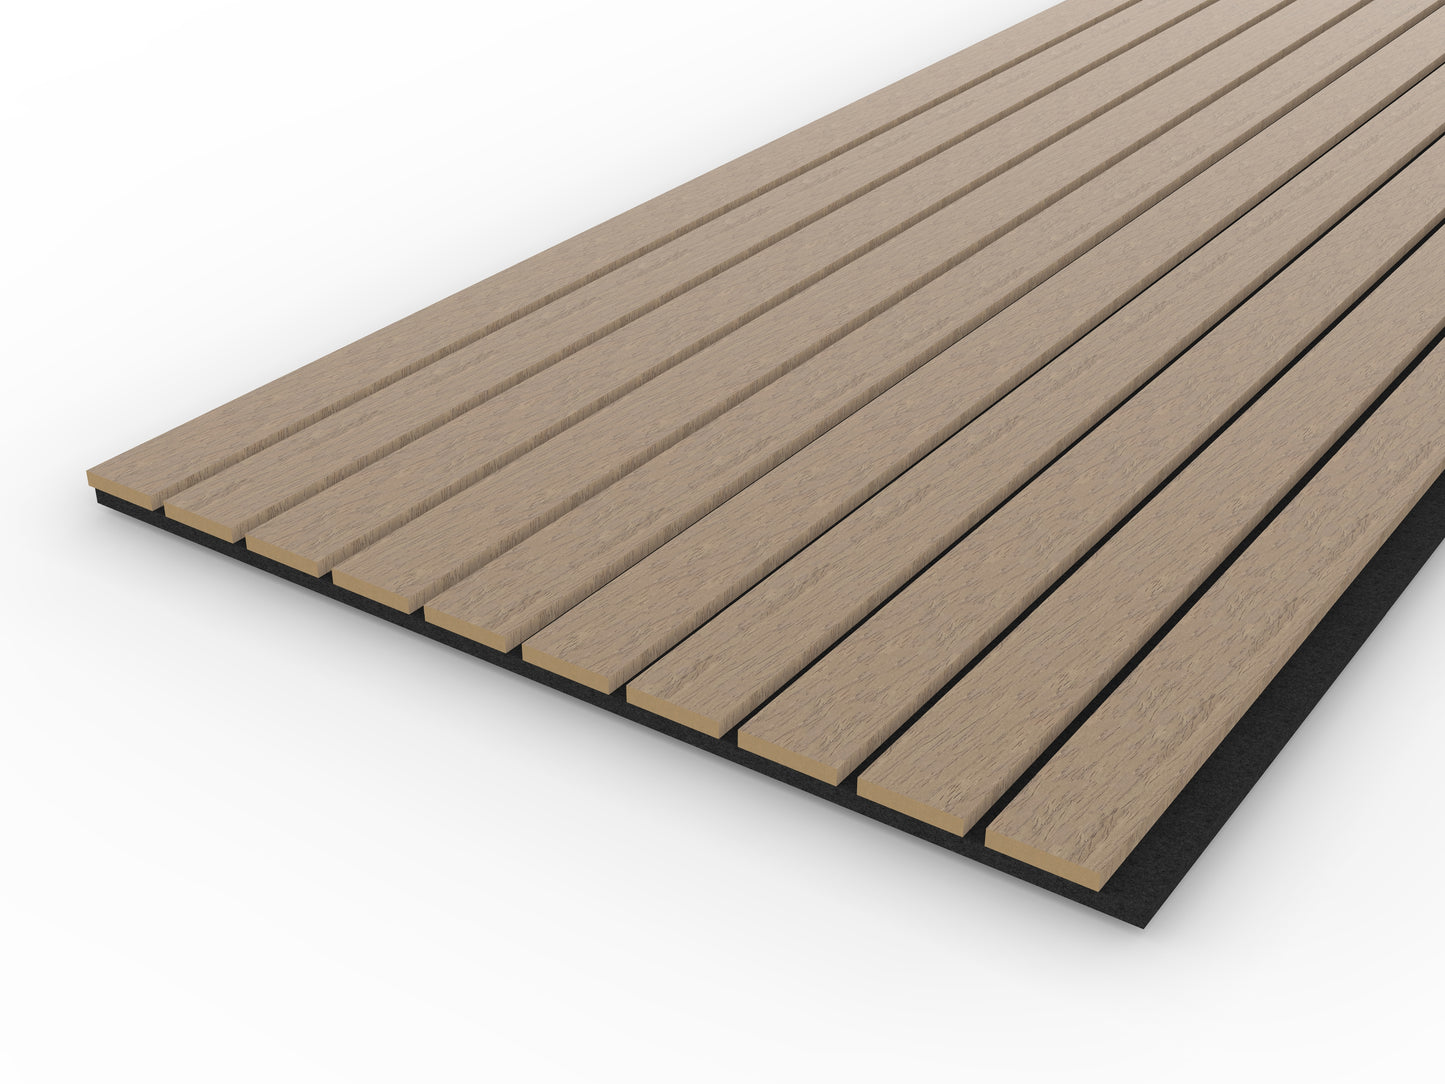 Walnut Acoustic Wood Wall Panel Wide Slat Series 2 - 240x60cm